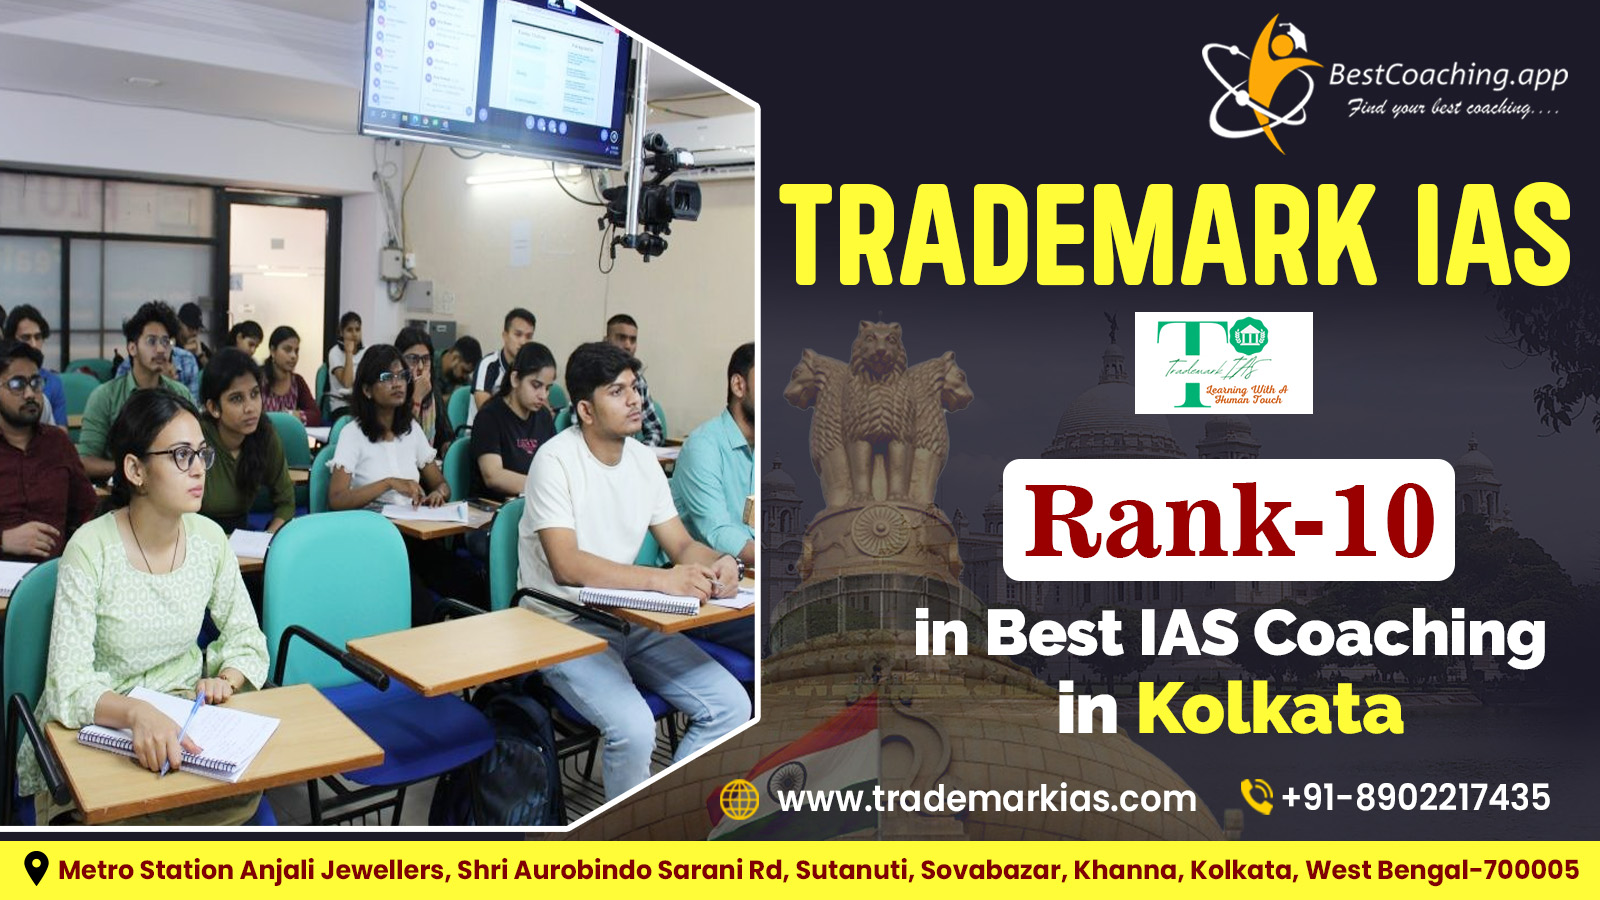 Trademark IAS Rank 10 in Best IAS Coaching in Kolkata